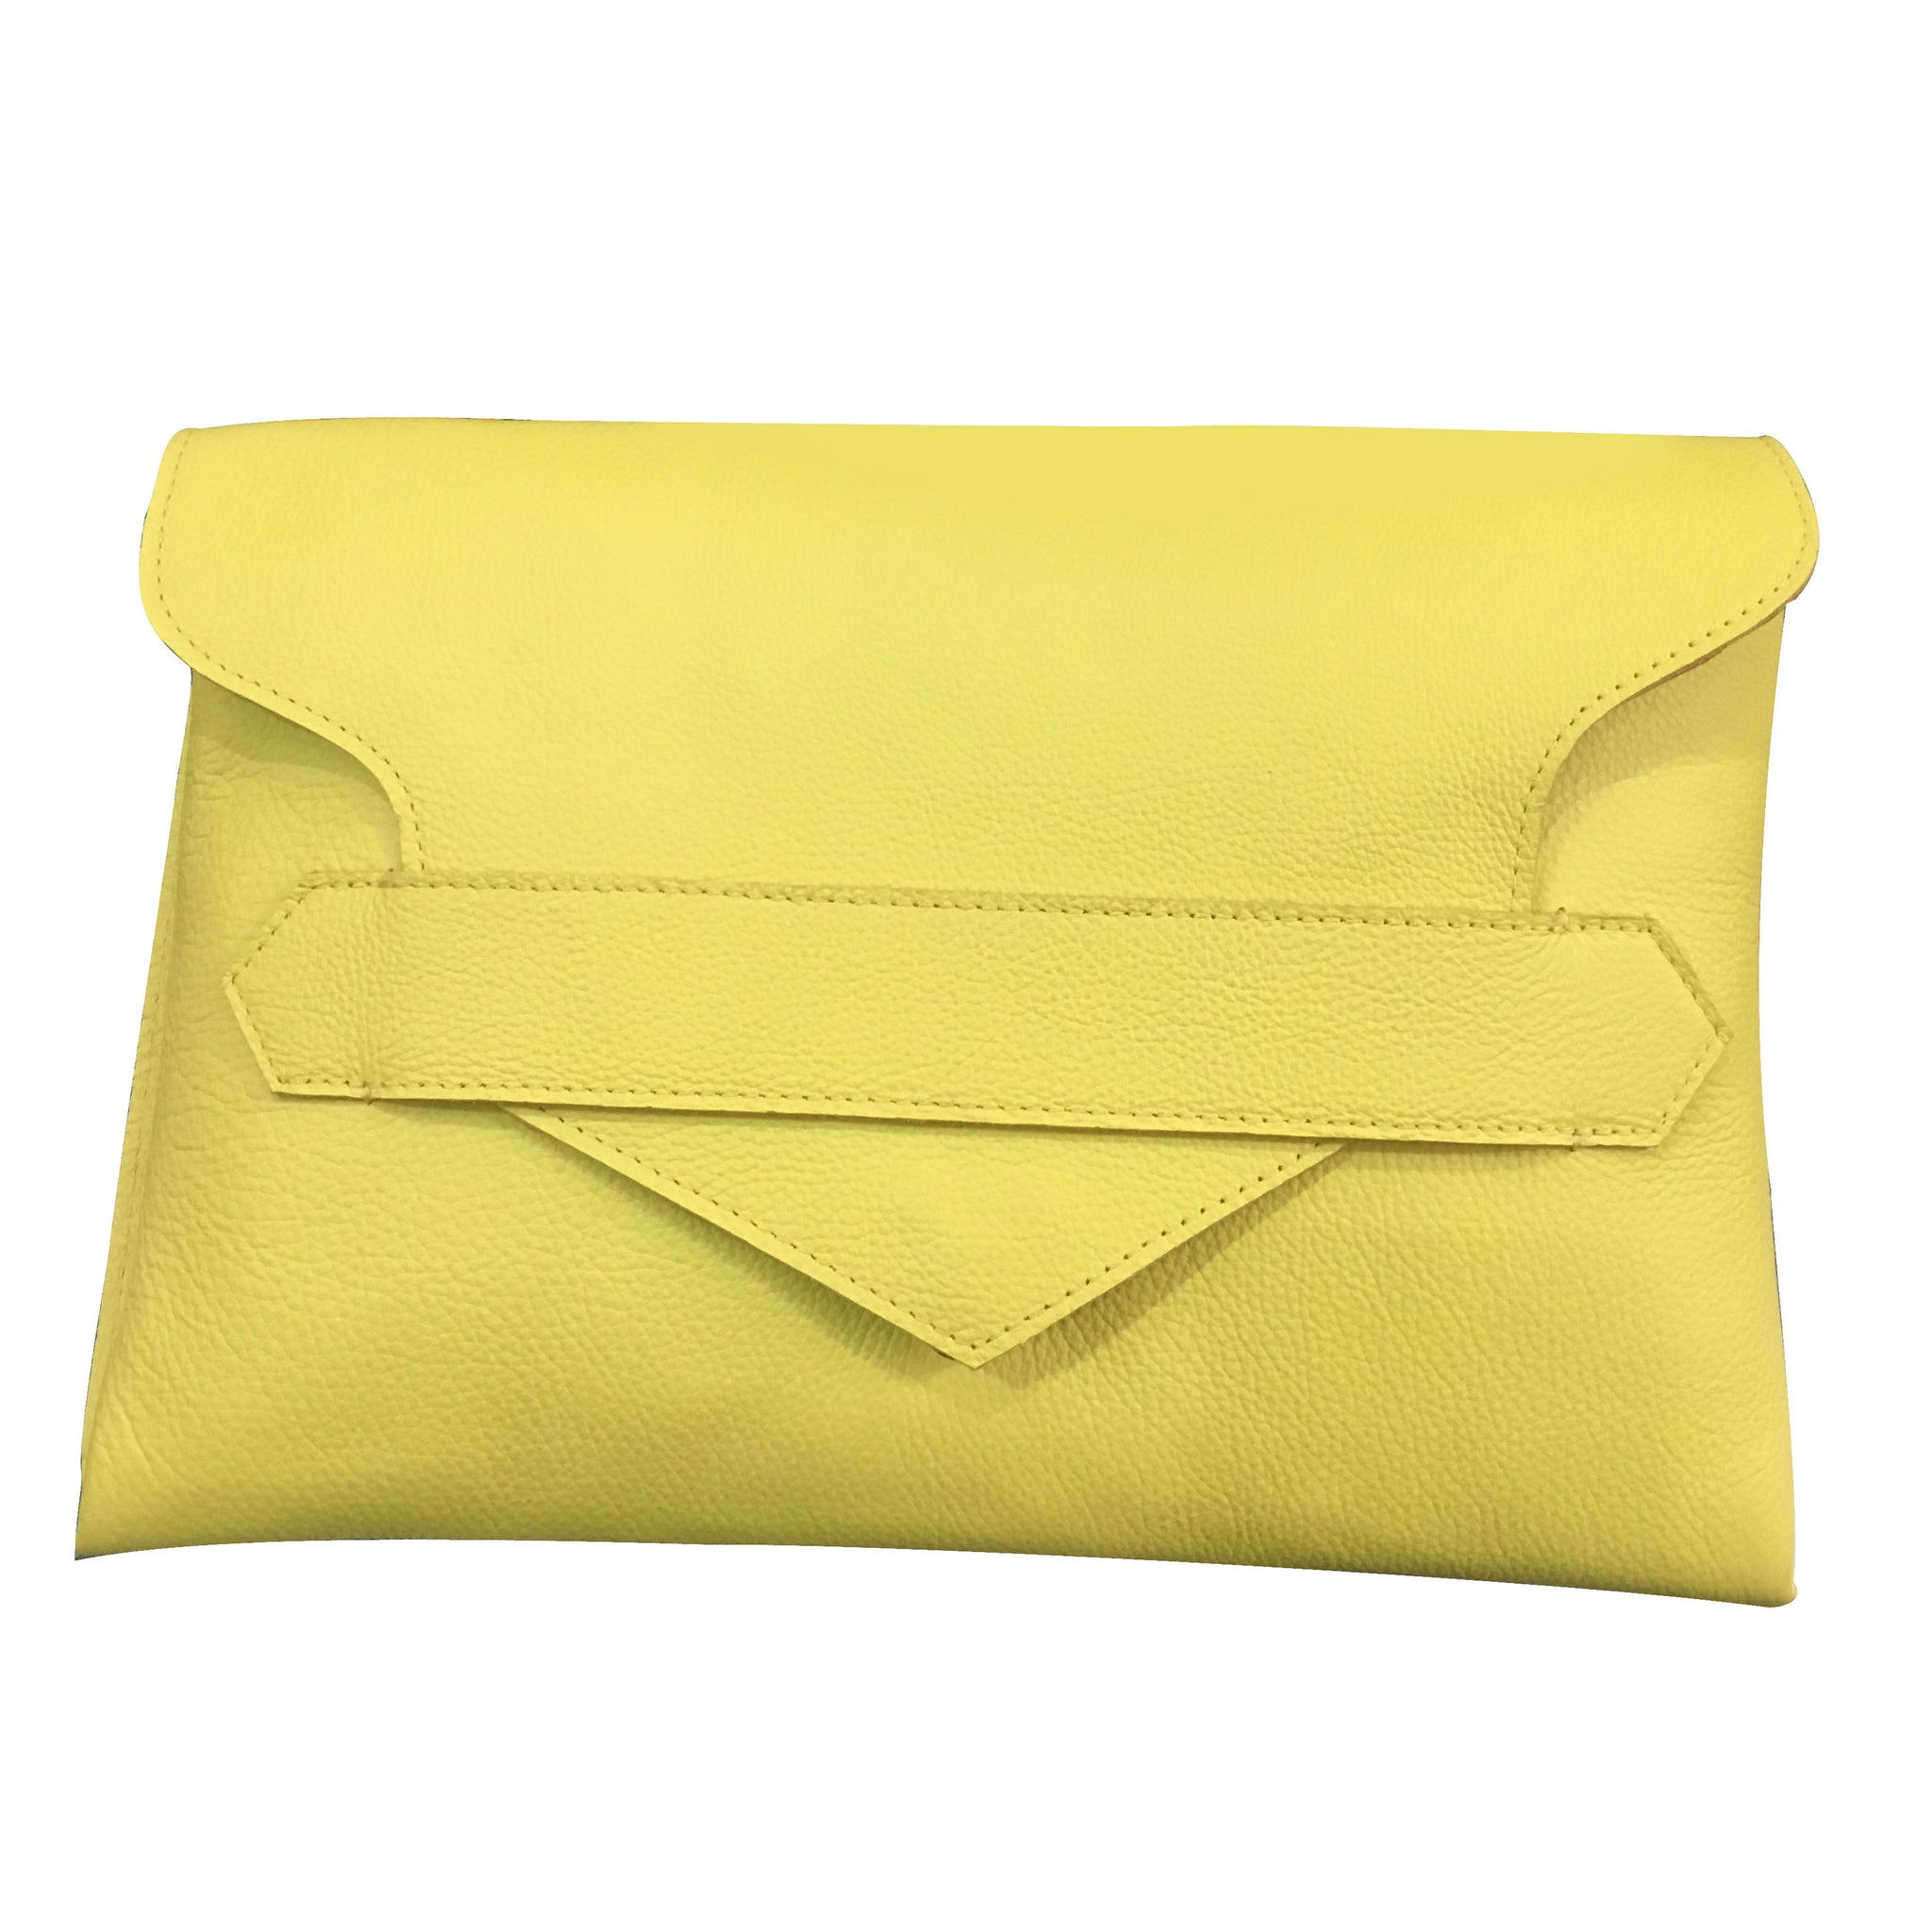 Buy Antin Women Transparent Handbag Shoulder Bag Tote Bag with Orange Neon  colour Nylon Clutch/Pouch Bag at Amazon.in